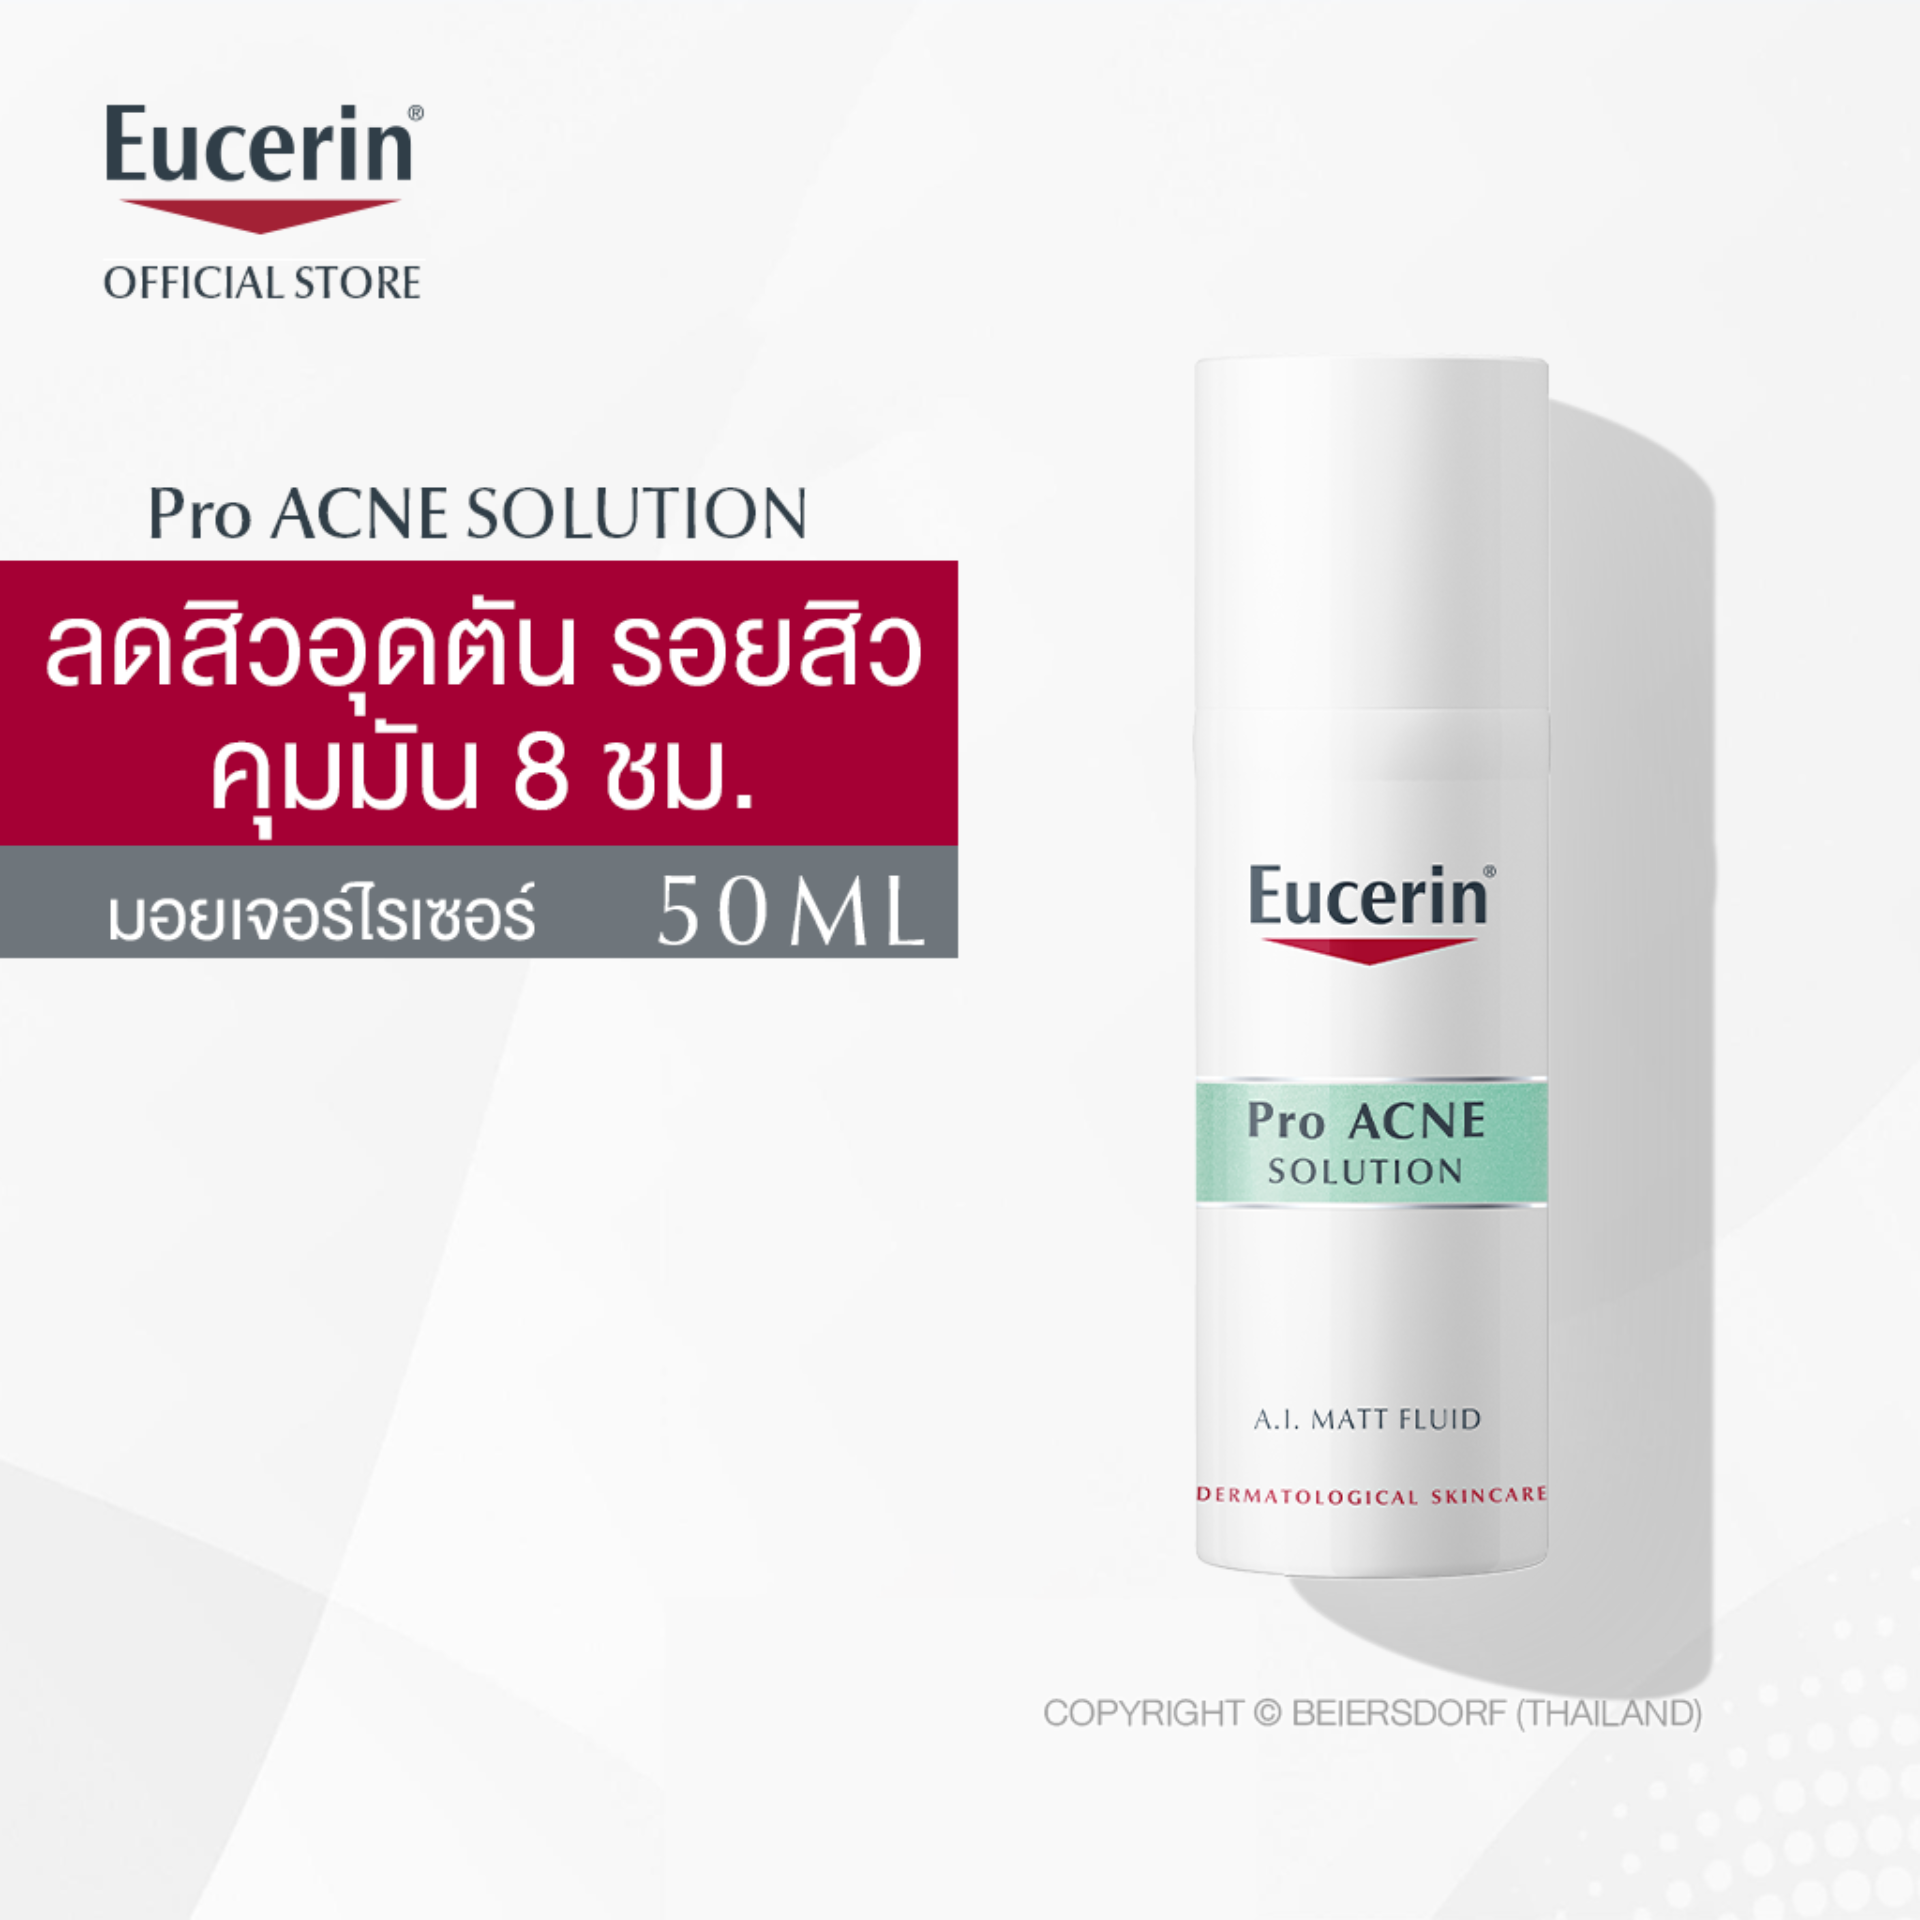 Eucerin Pro Acne Solution A.I Matt Fluid 50ml ยูเซอริน โปร แอคเน่ โซลูชั่น เอ.ไอ. แมท ฟูลอิด 50มล (ครีมบำรุงผิวหน้า ลดปัญหาสิว รอยดำ รอยแดง คุมมัน)